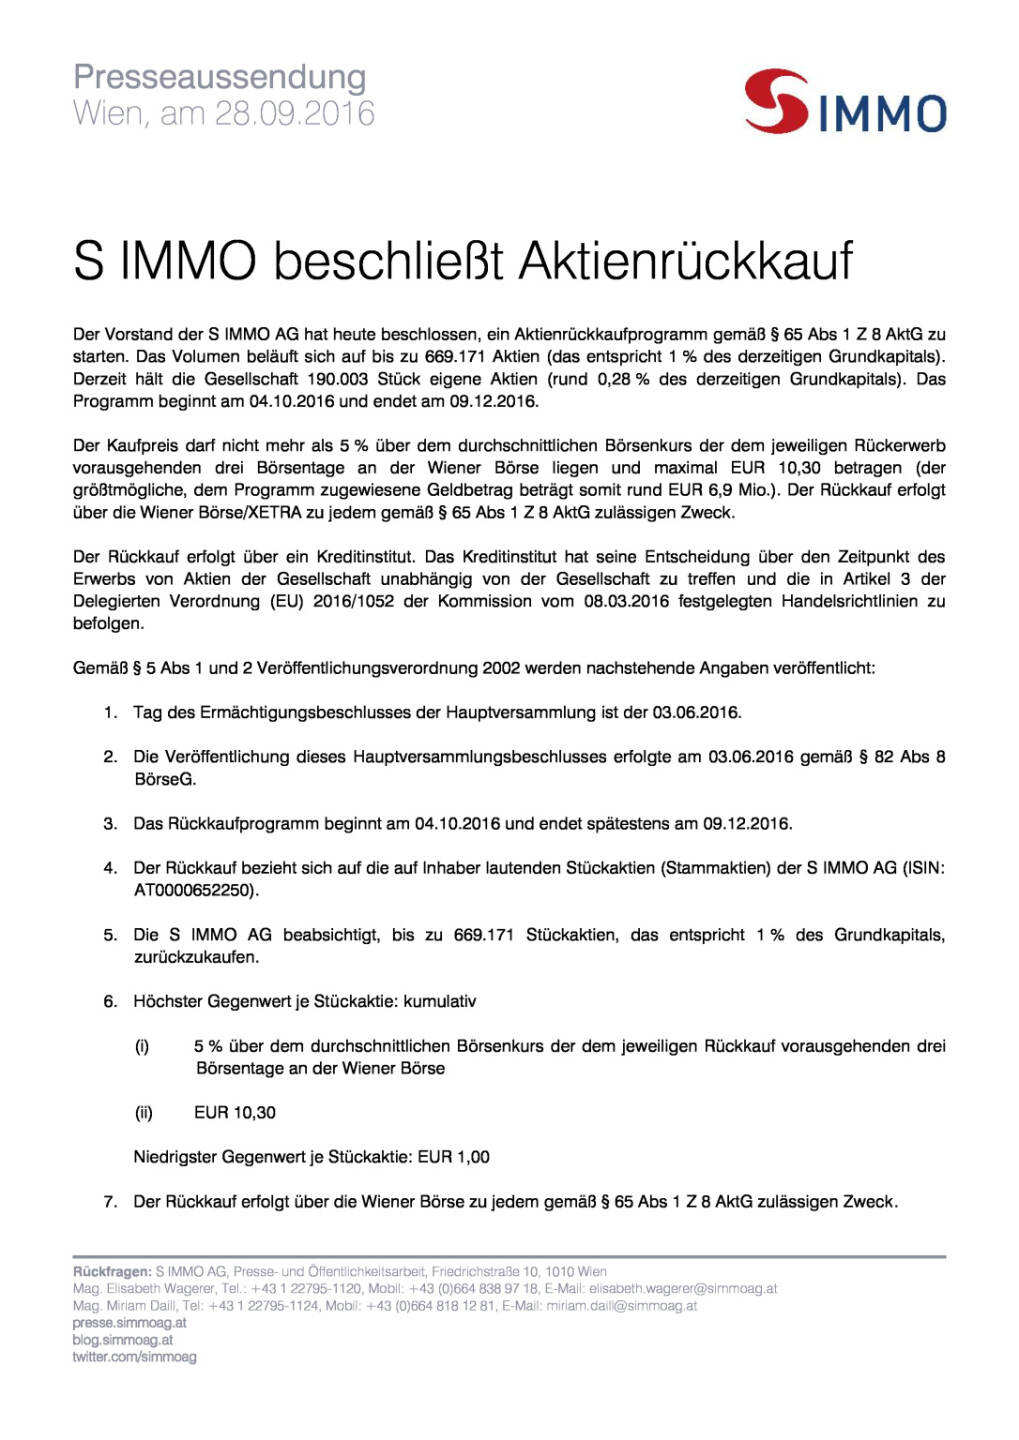 S Immo beschliesst Aktienrückkauf, Seite 1/2, komplettes Dokument unter http://boerse-social.com/static/uploads/file_1842_s_immo_beschliesst_aktienruckkauf.pdf